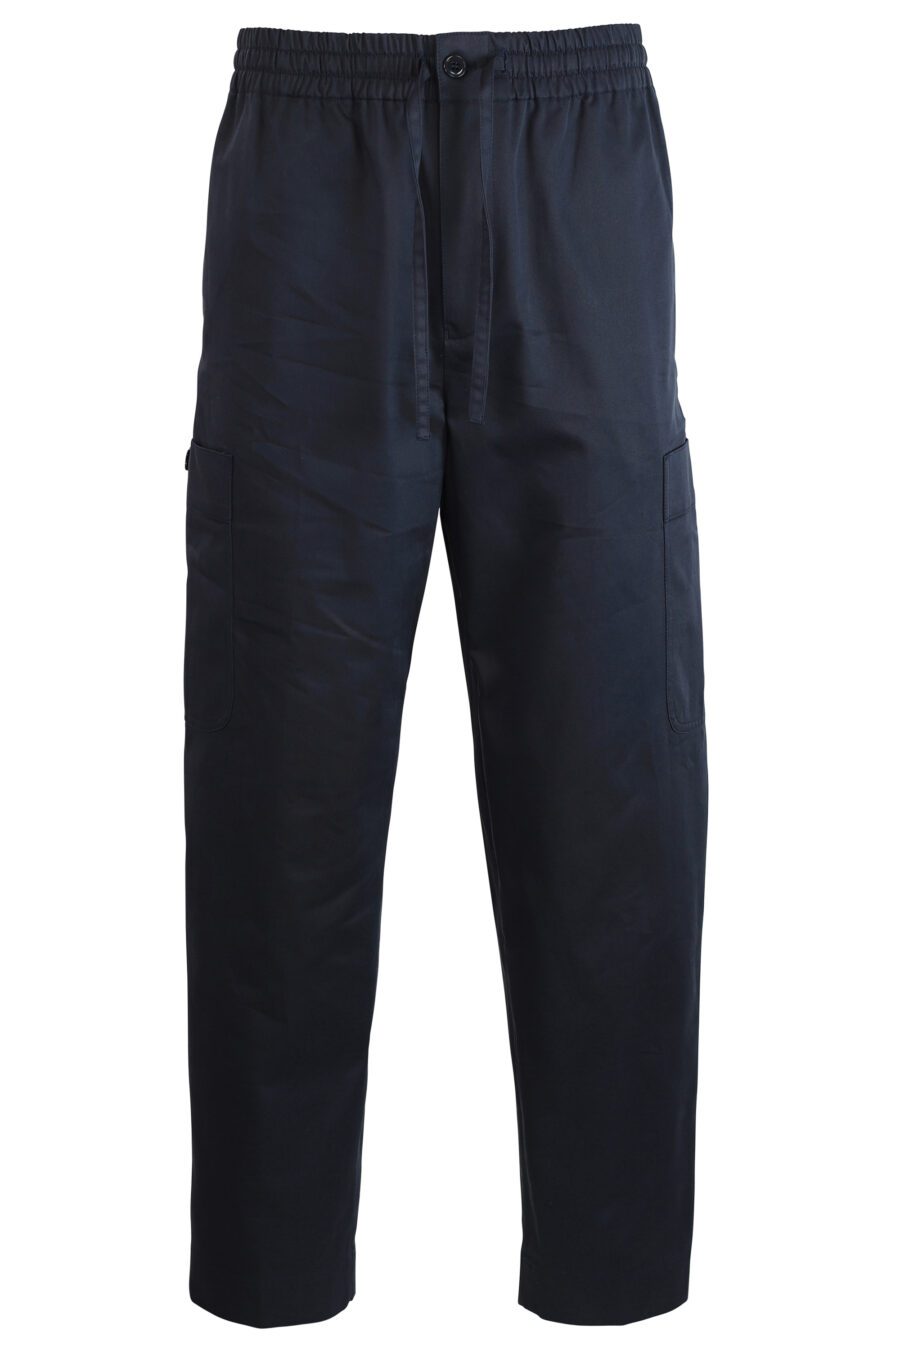 Pantalon bleu avec poche latérale et logo - 3612230409323